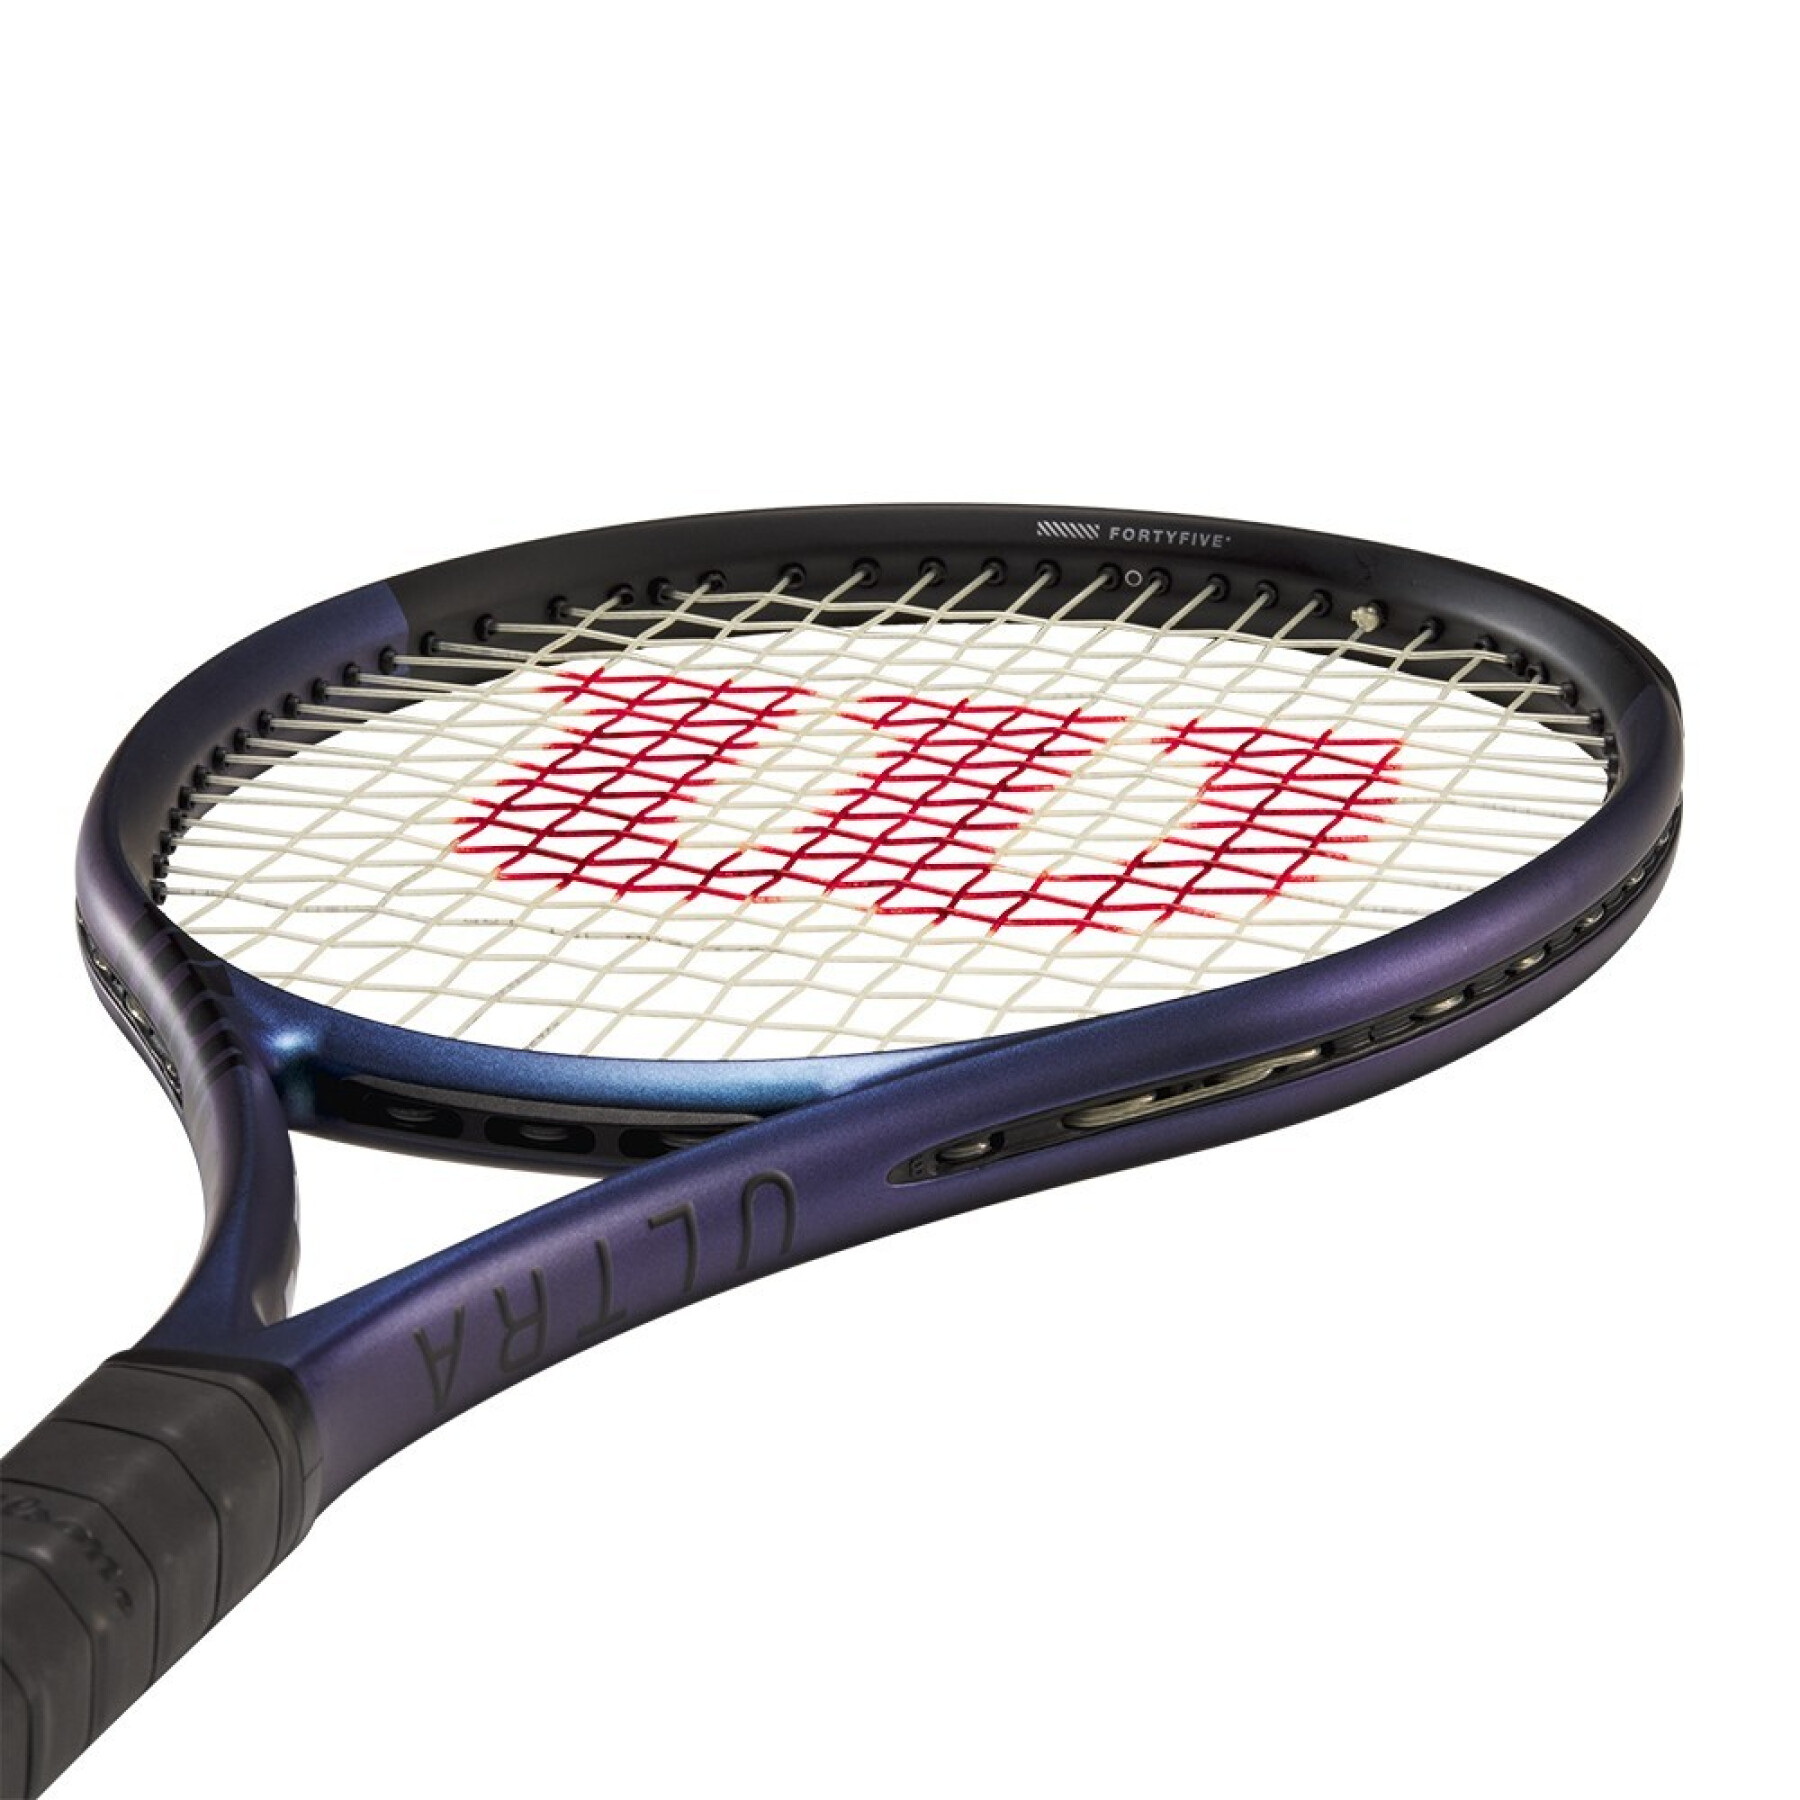 Tennis racket Wilson Ultra 100L V4.0 FRM